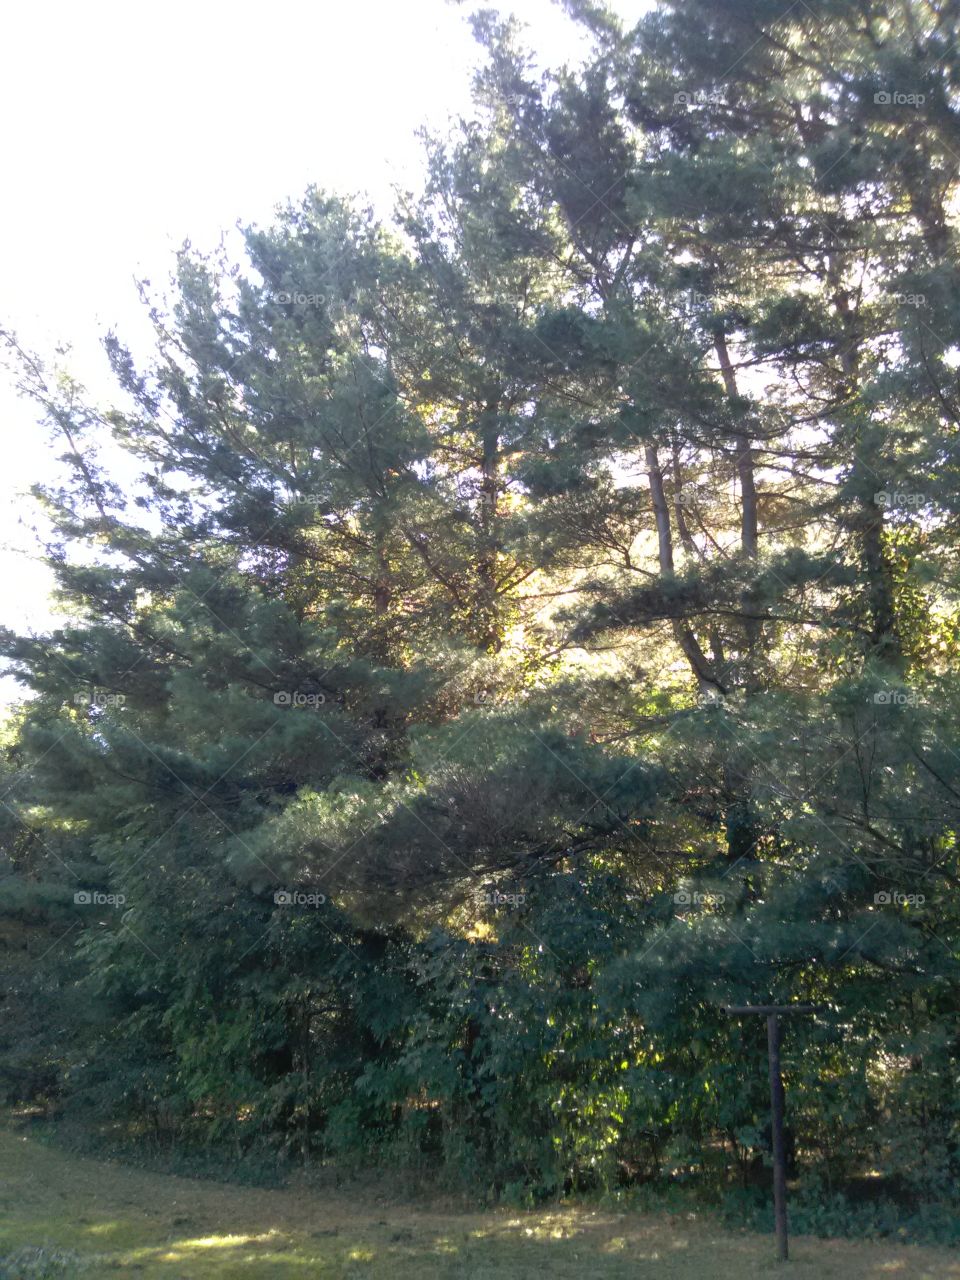 The pretty Pine trees